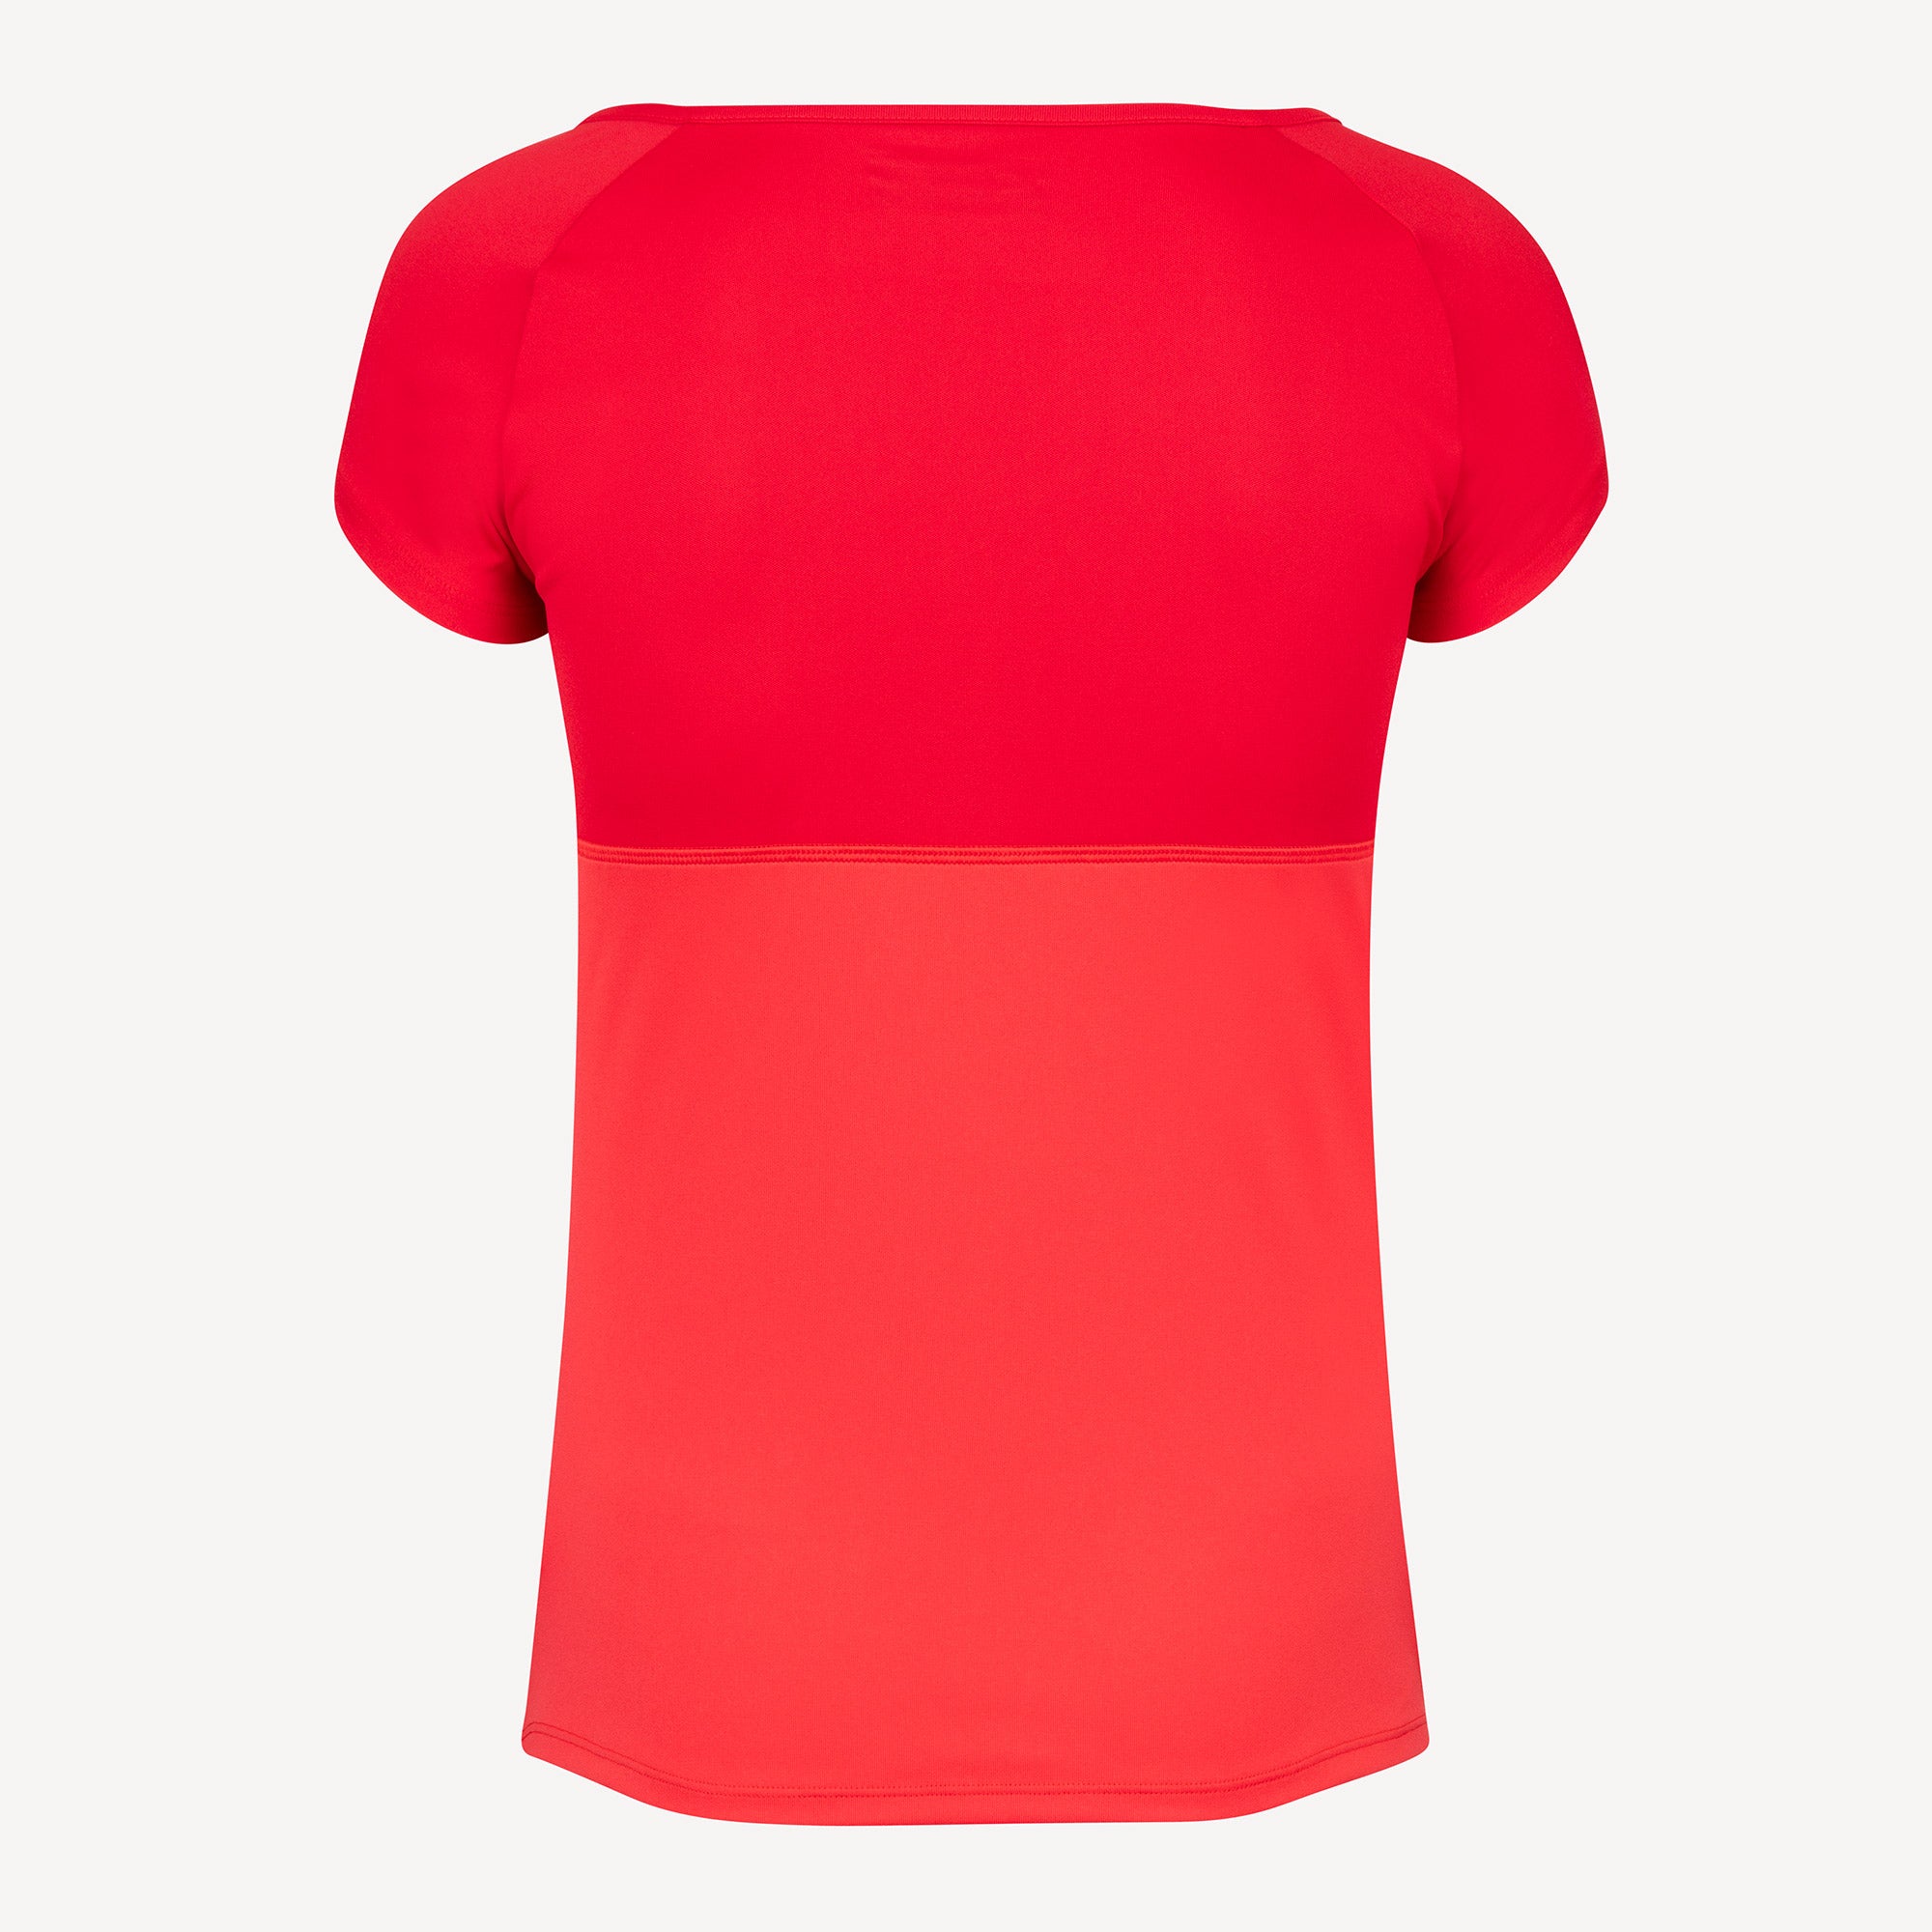 Babolat Play Club Girls' Tennis Shirt Red (2)